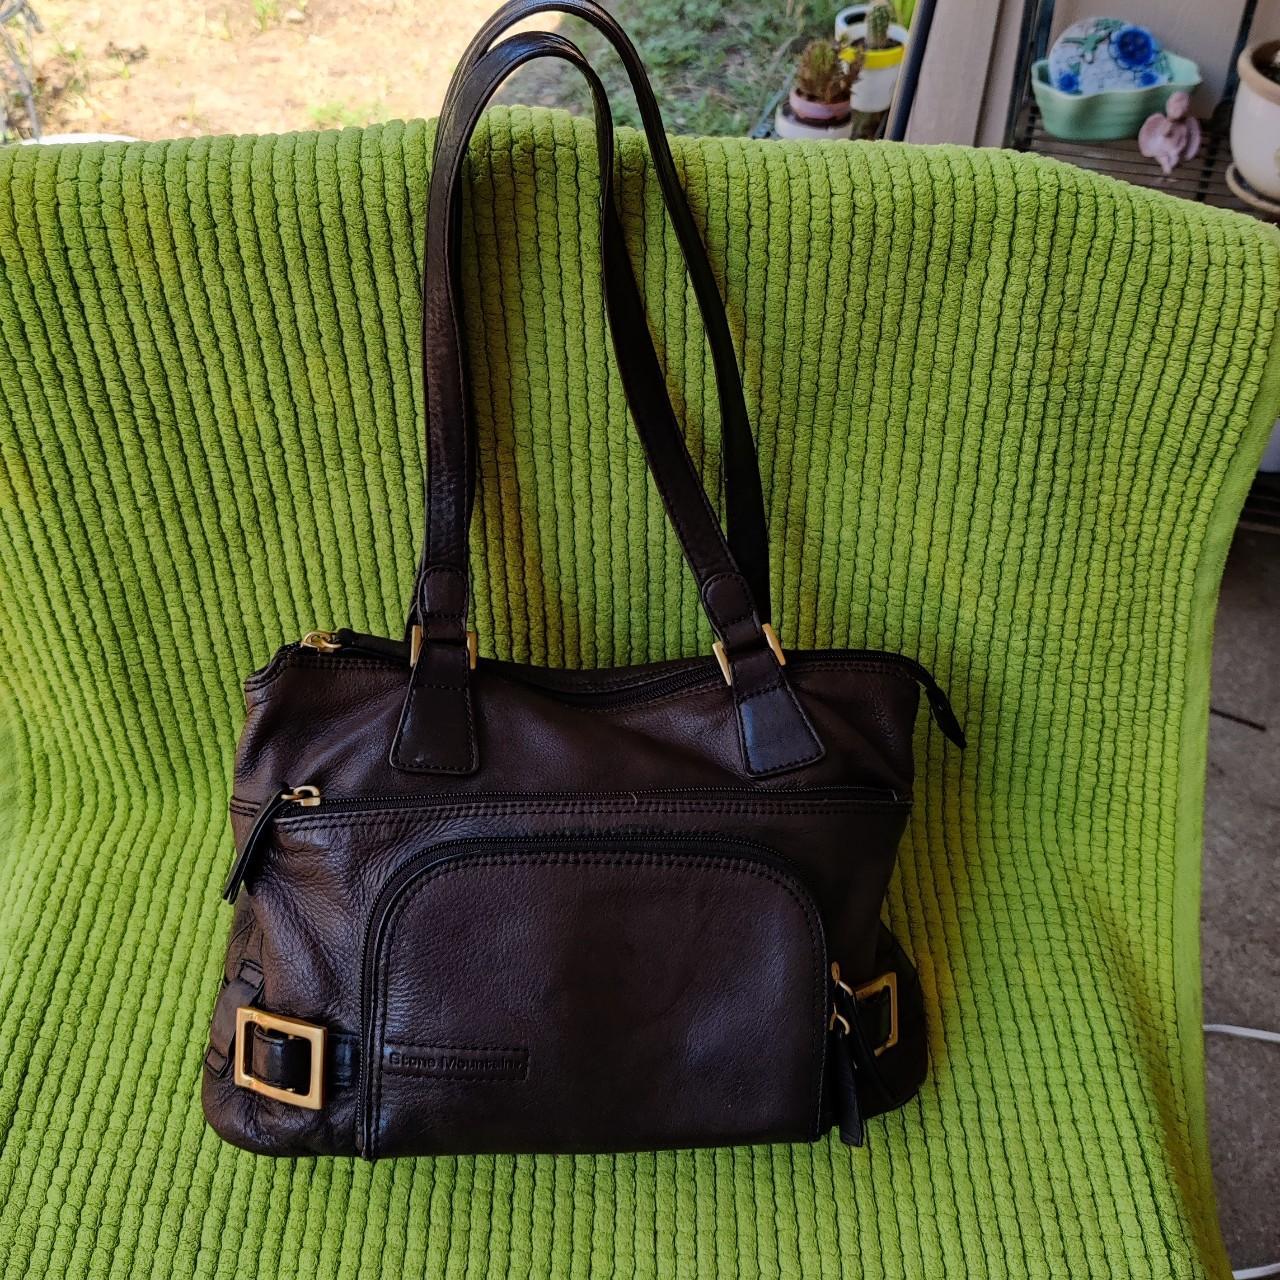 Stone Mountain Black And Tan Leather Tote Women's Purse Handbag